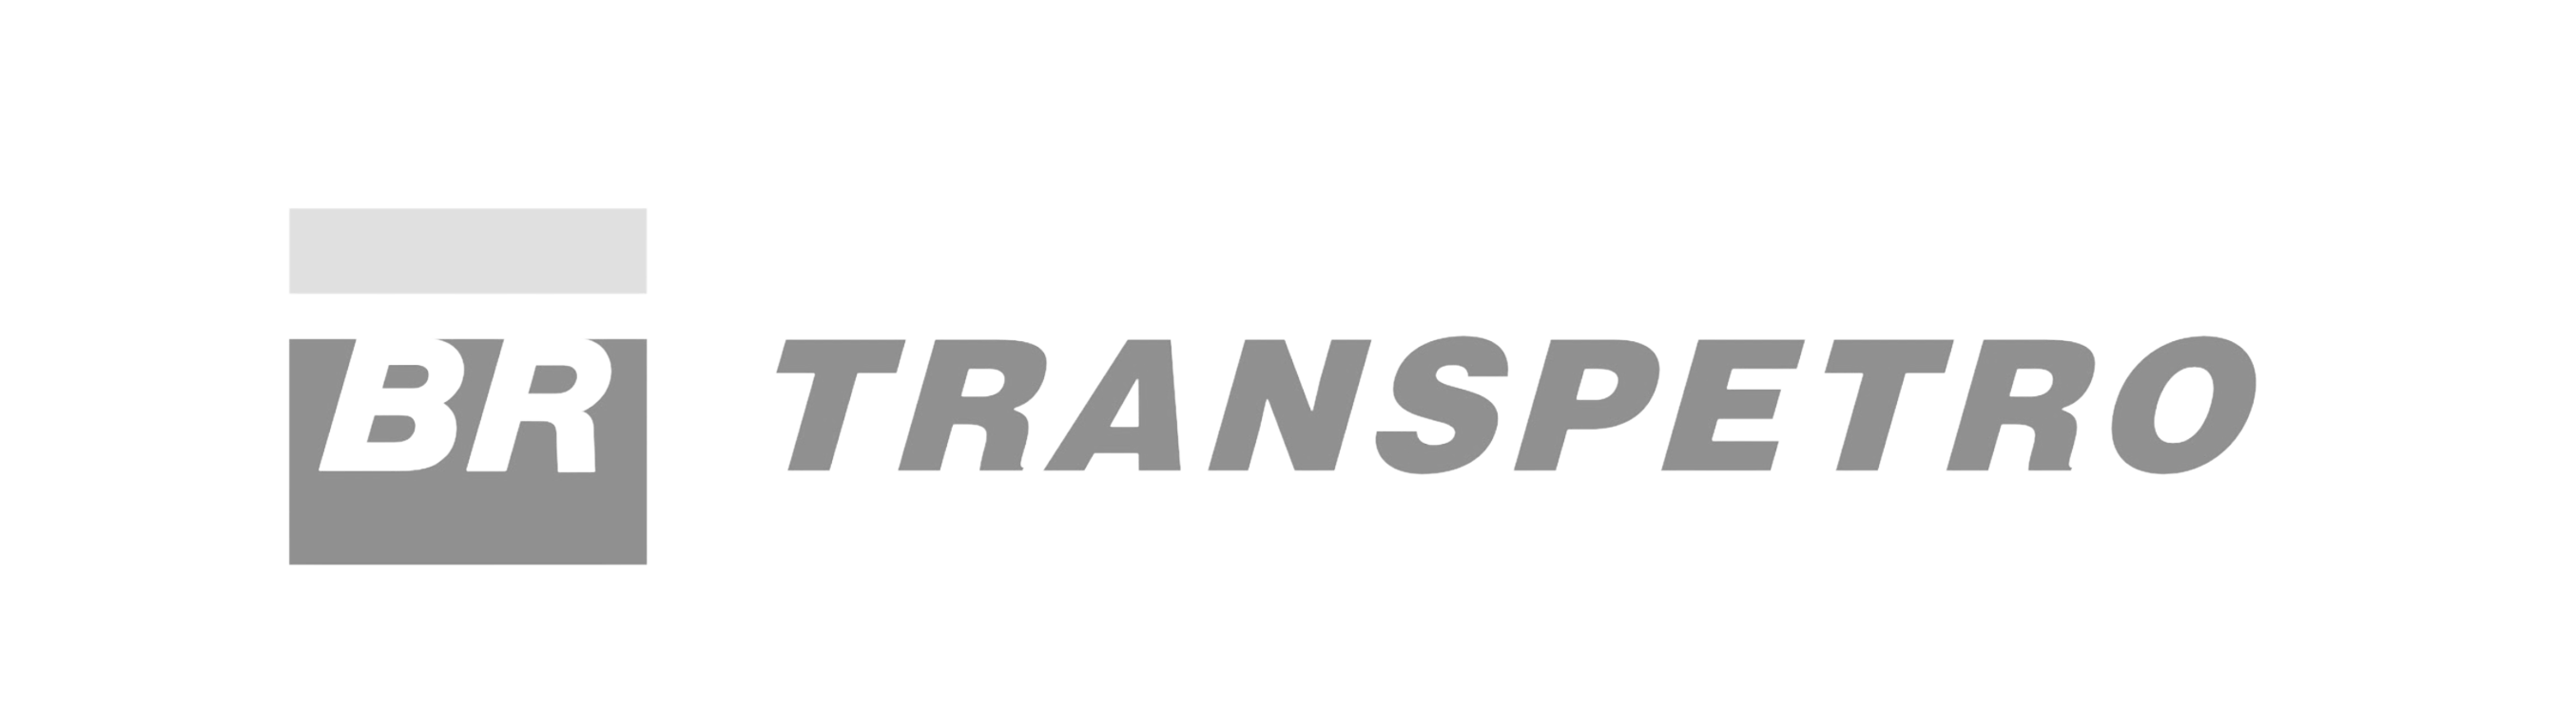 Transpetro